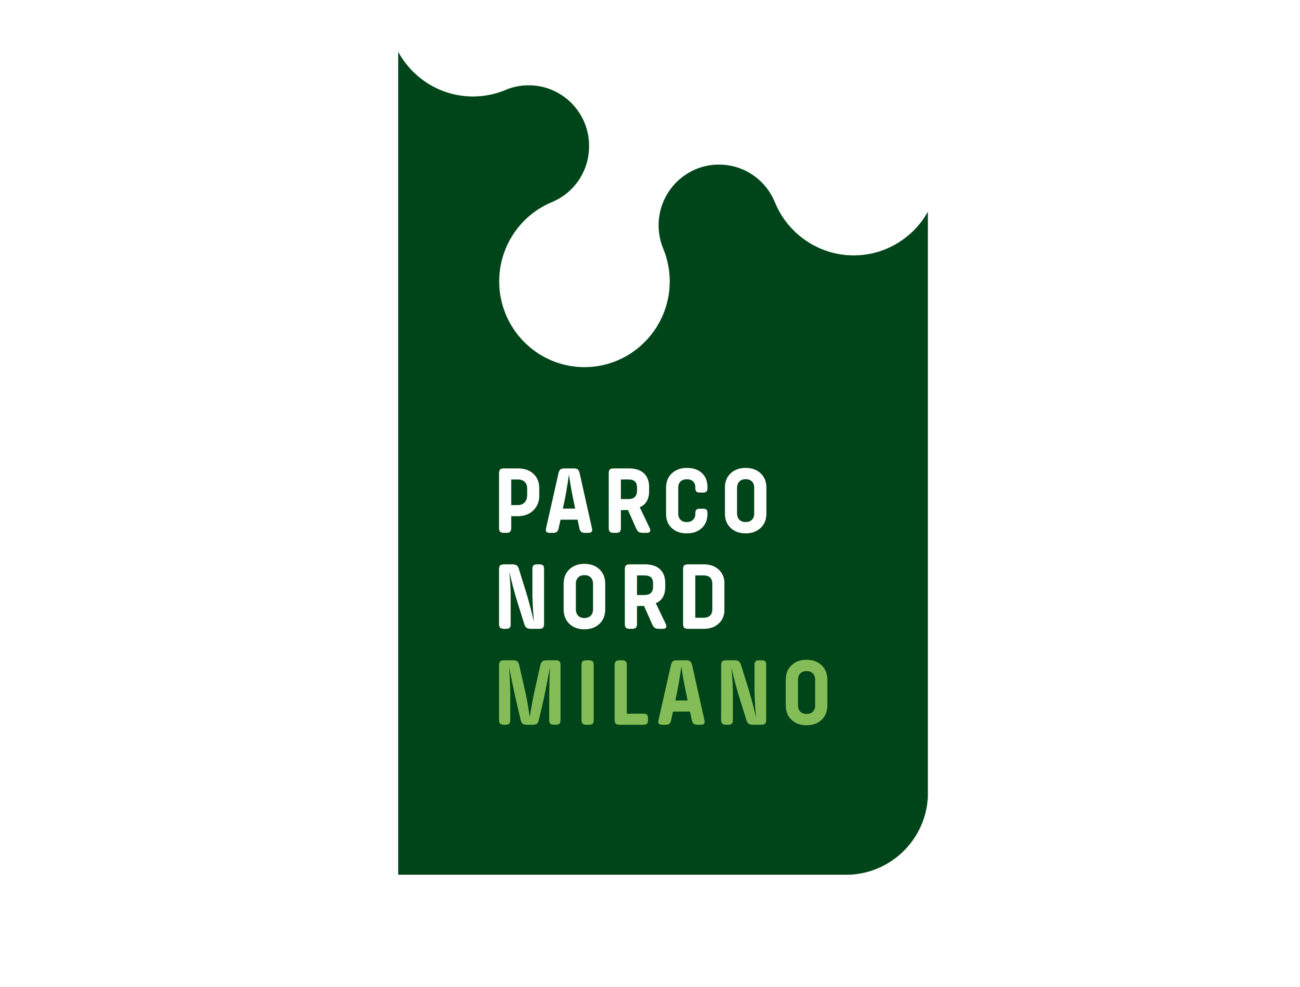 Parco-Nord-Milano-logo-new